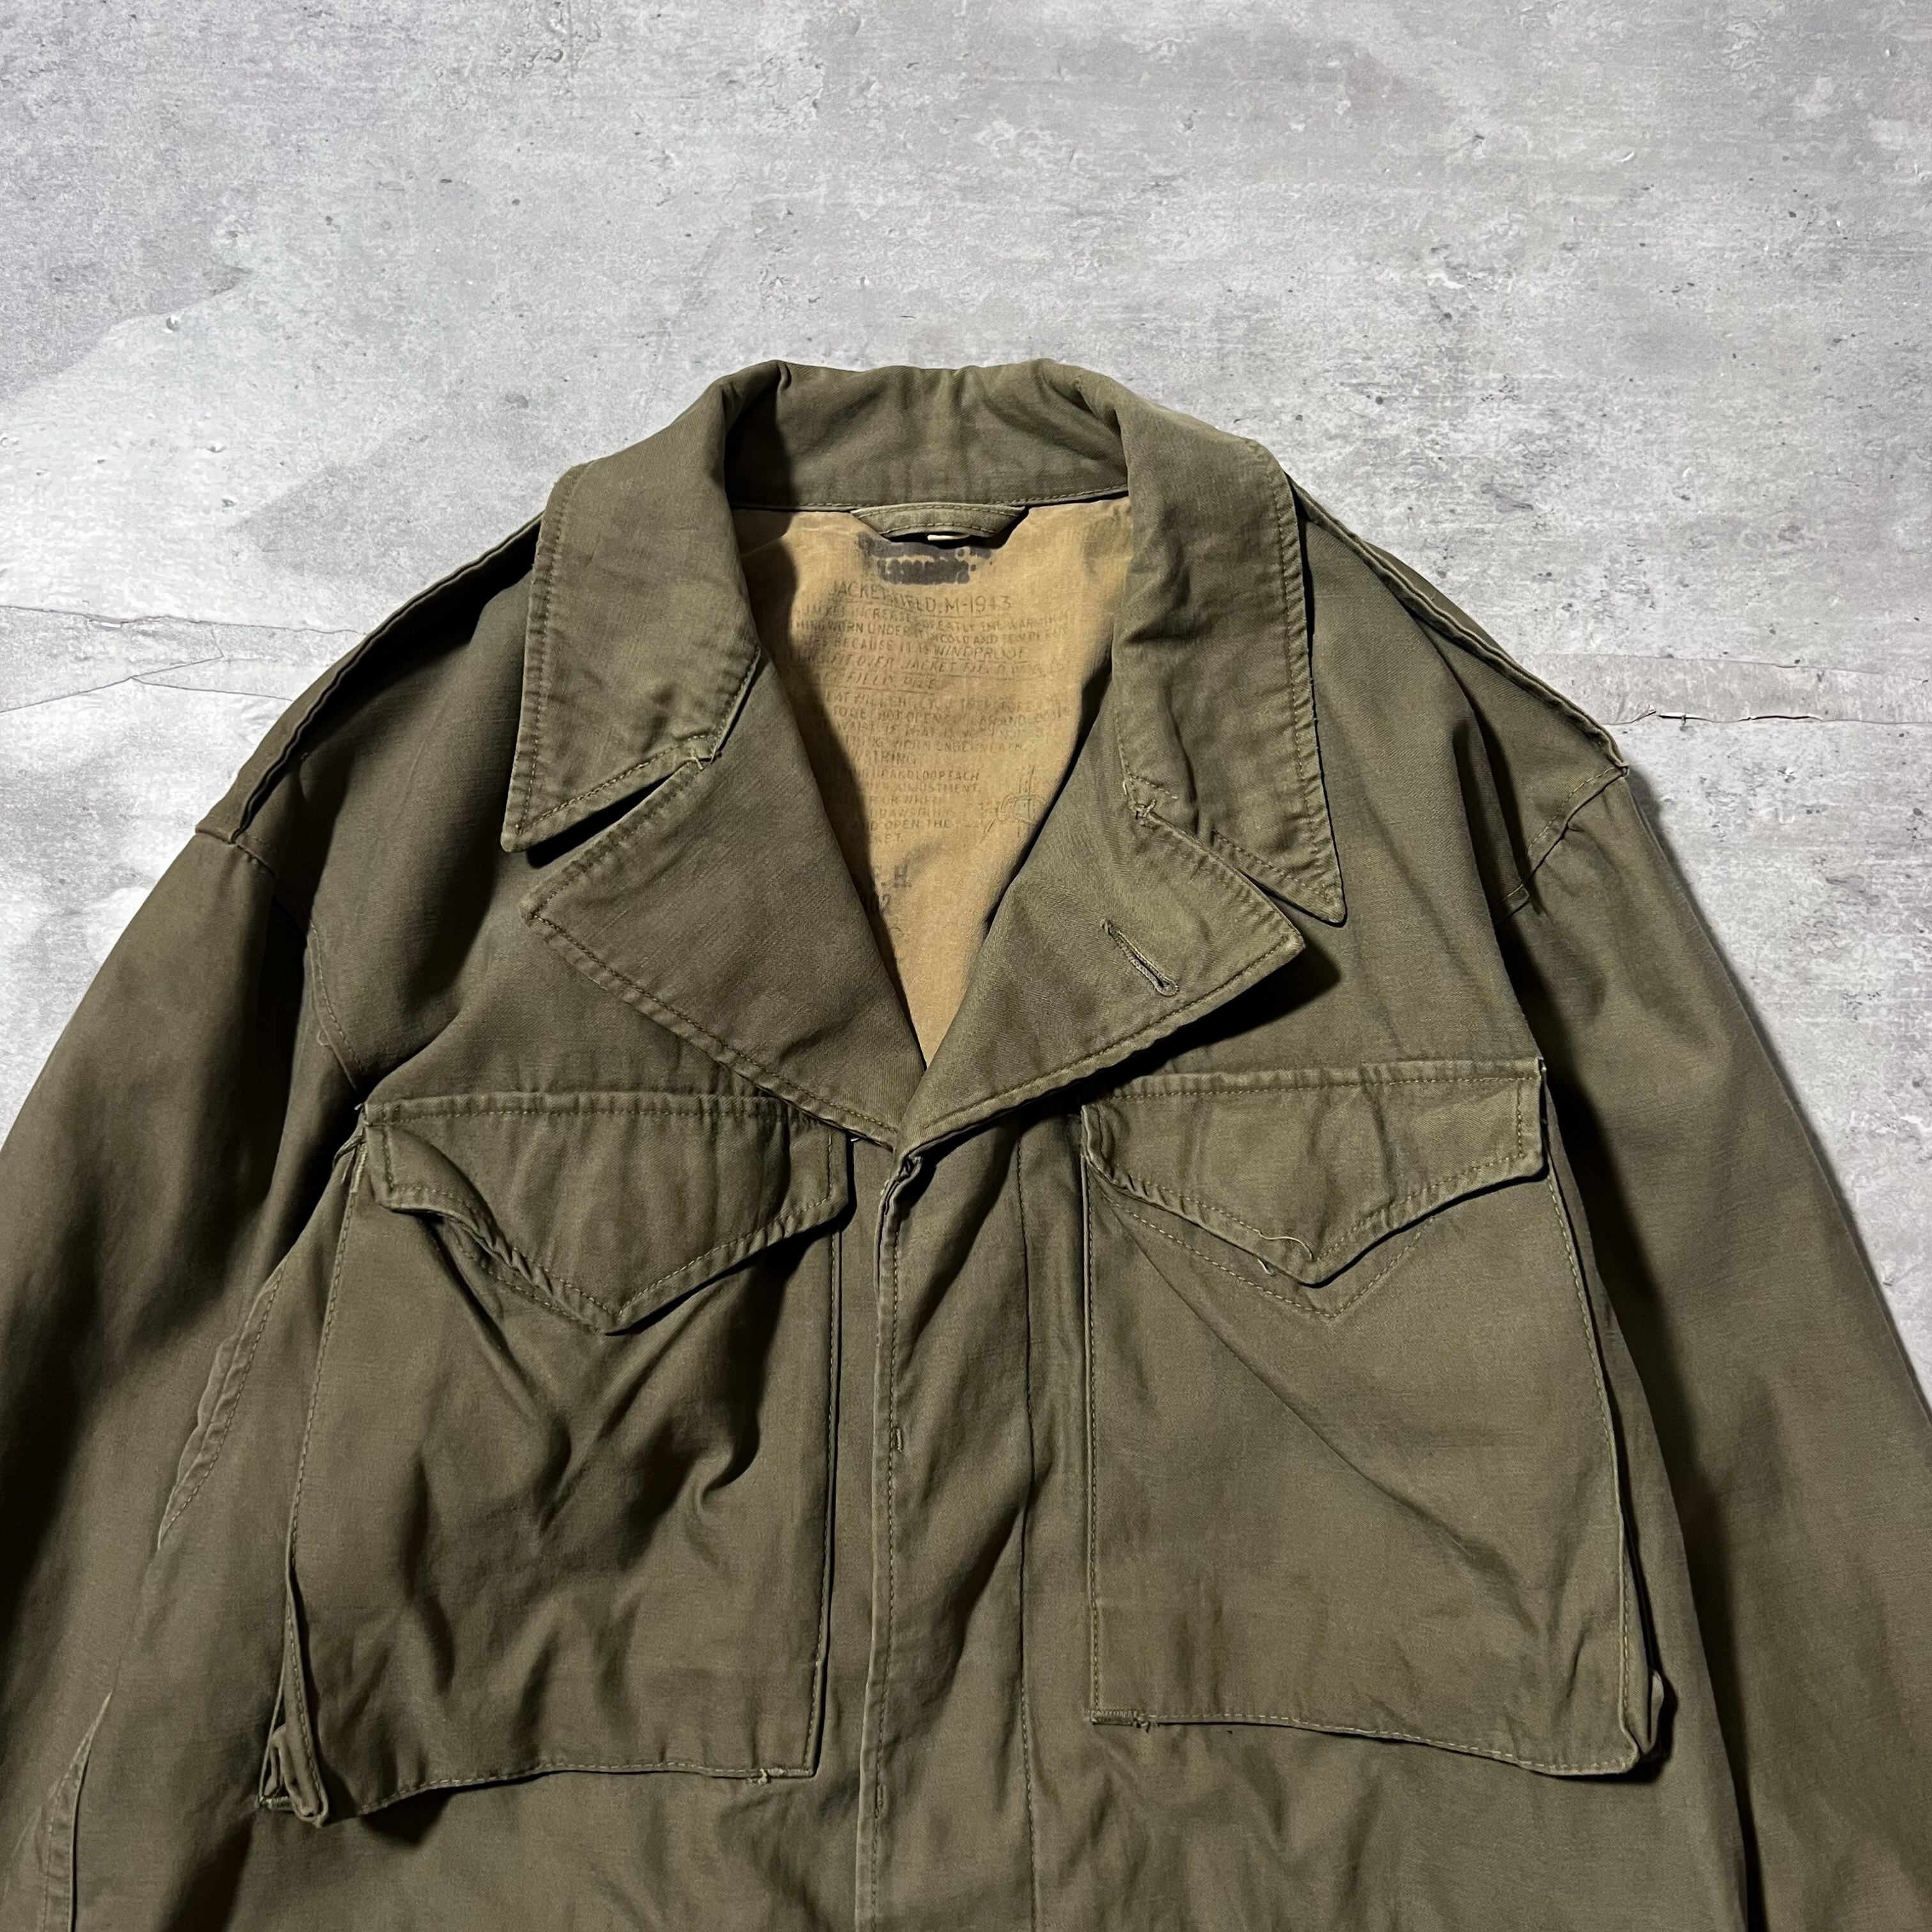 40s “US ARMY” M-43 field jacket 34R 40年代 M-1943 米国軍 米軍 